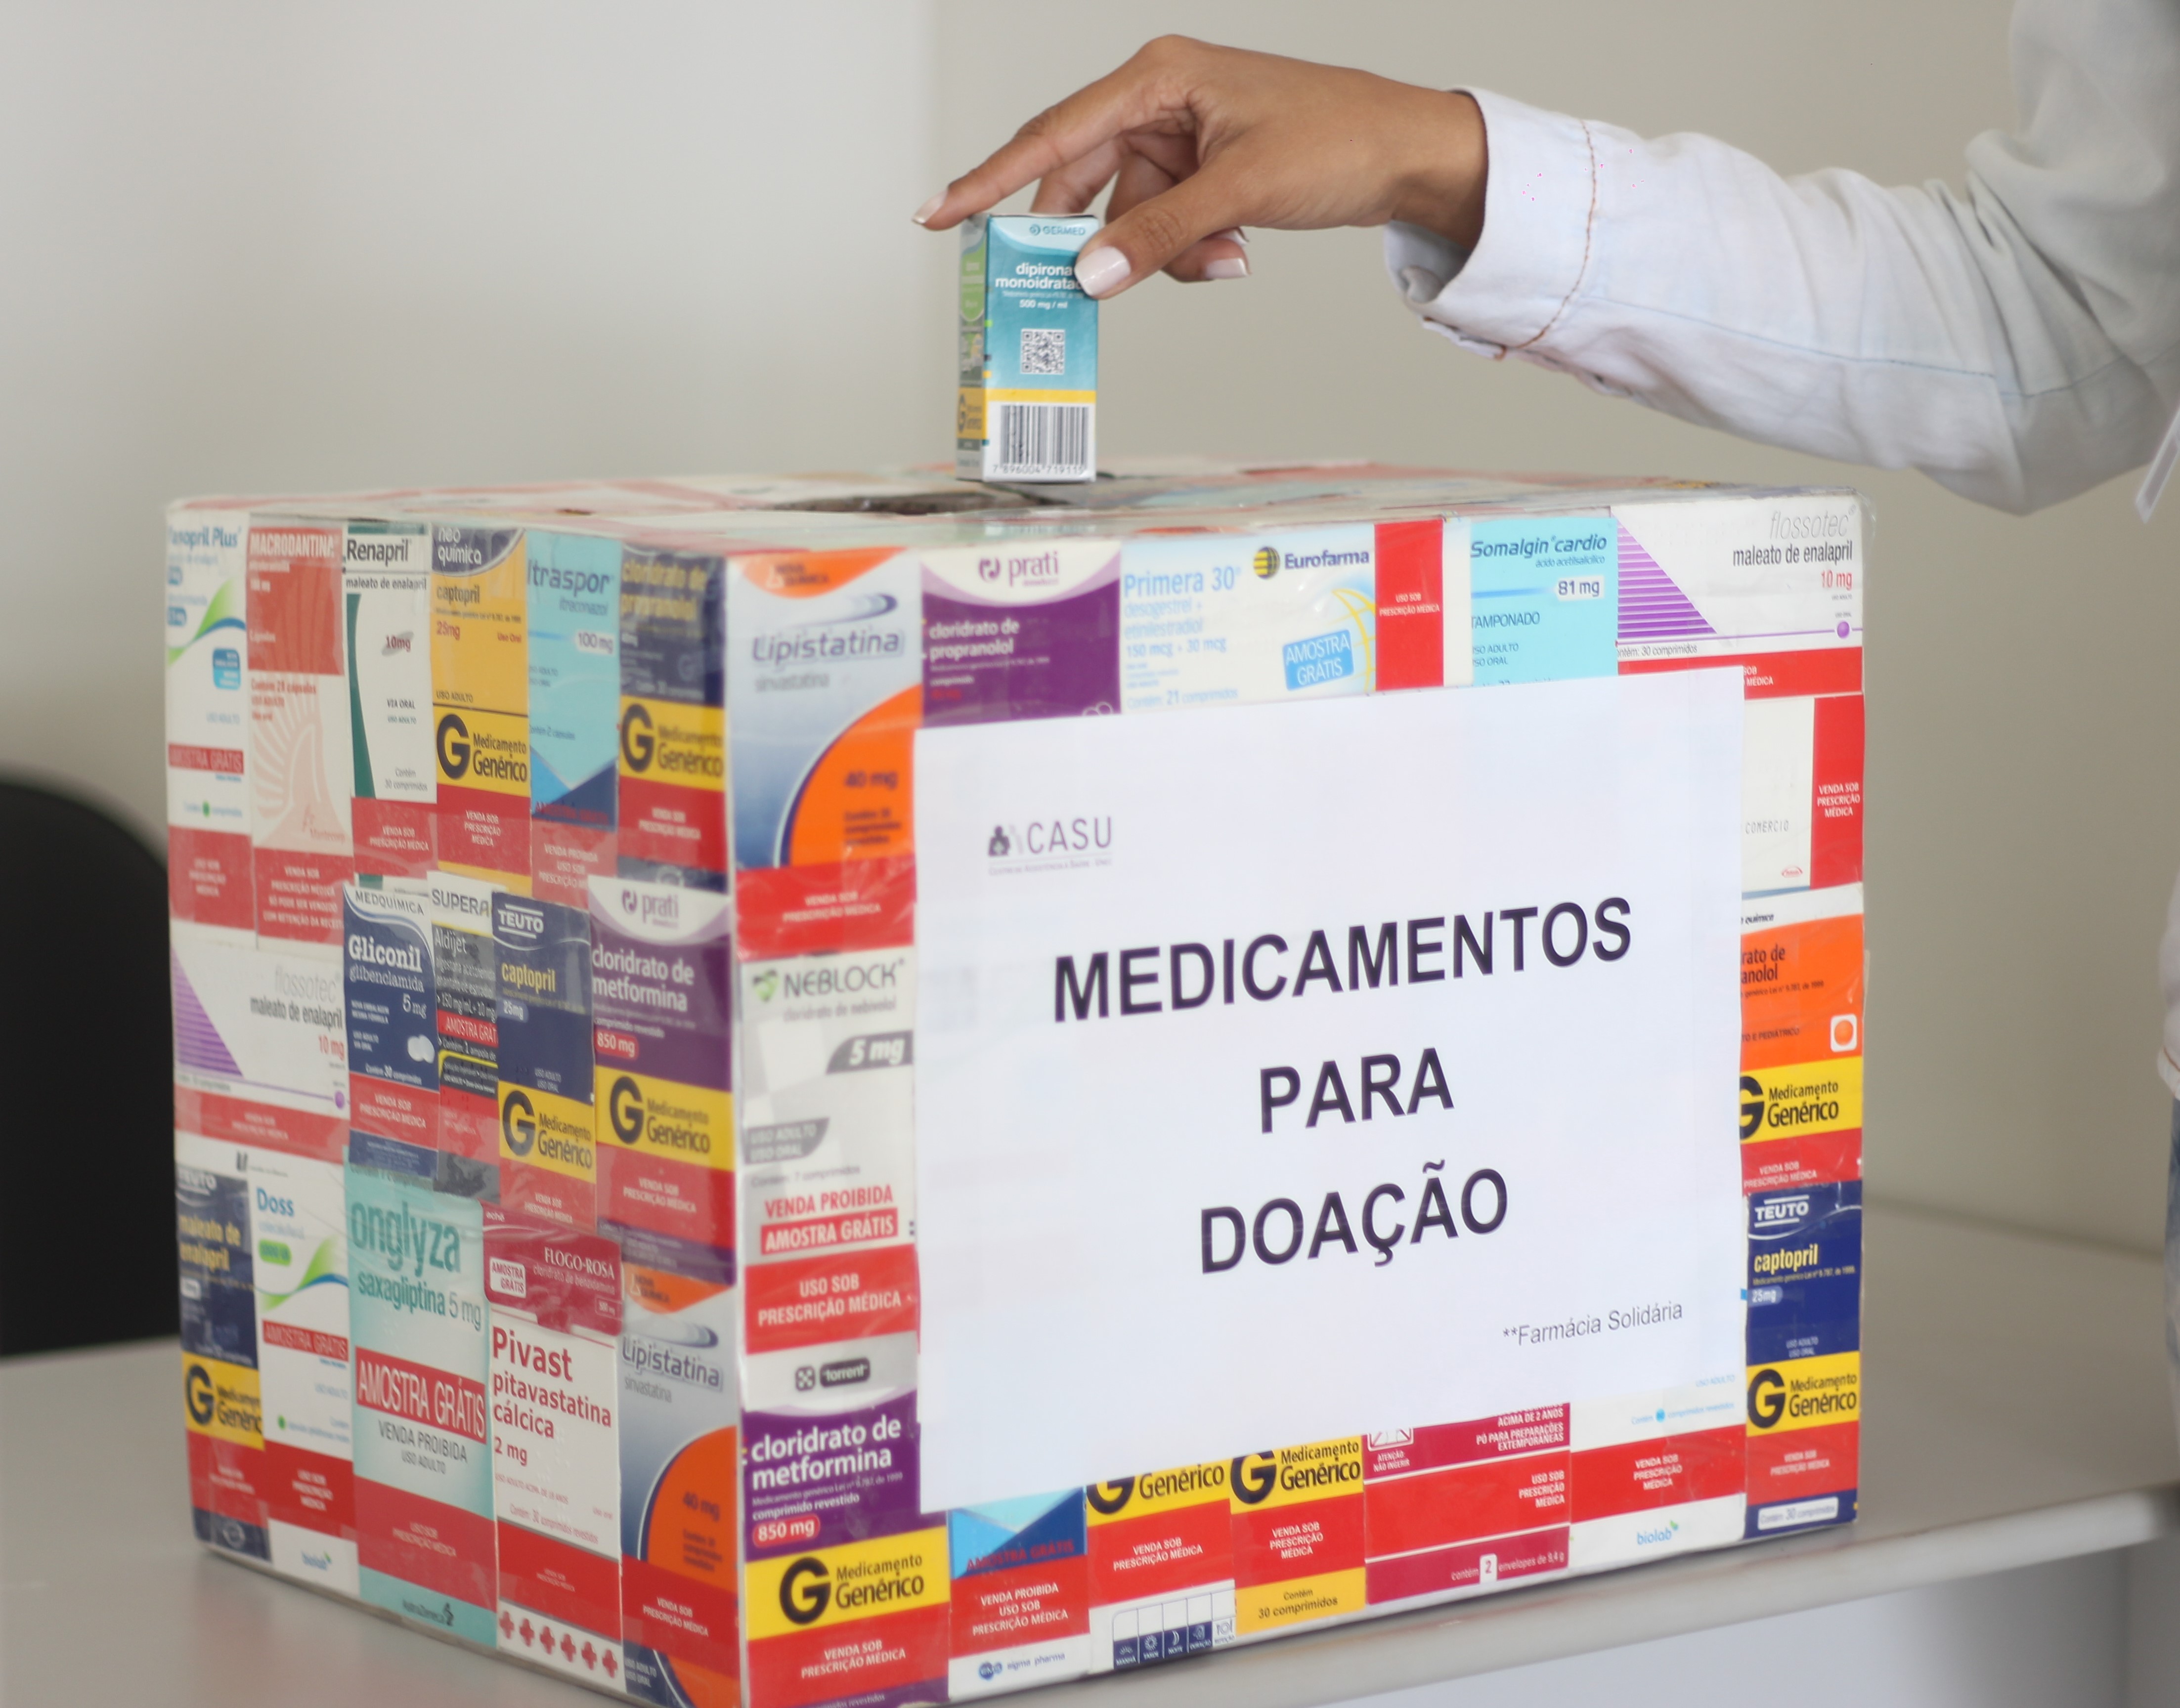 Vereadores propem projeto para doao de medicamentos